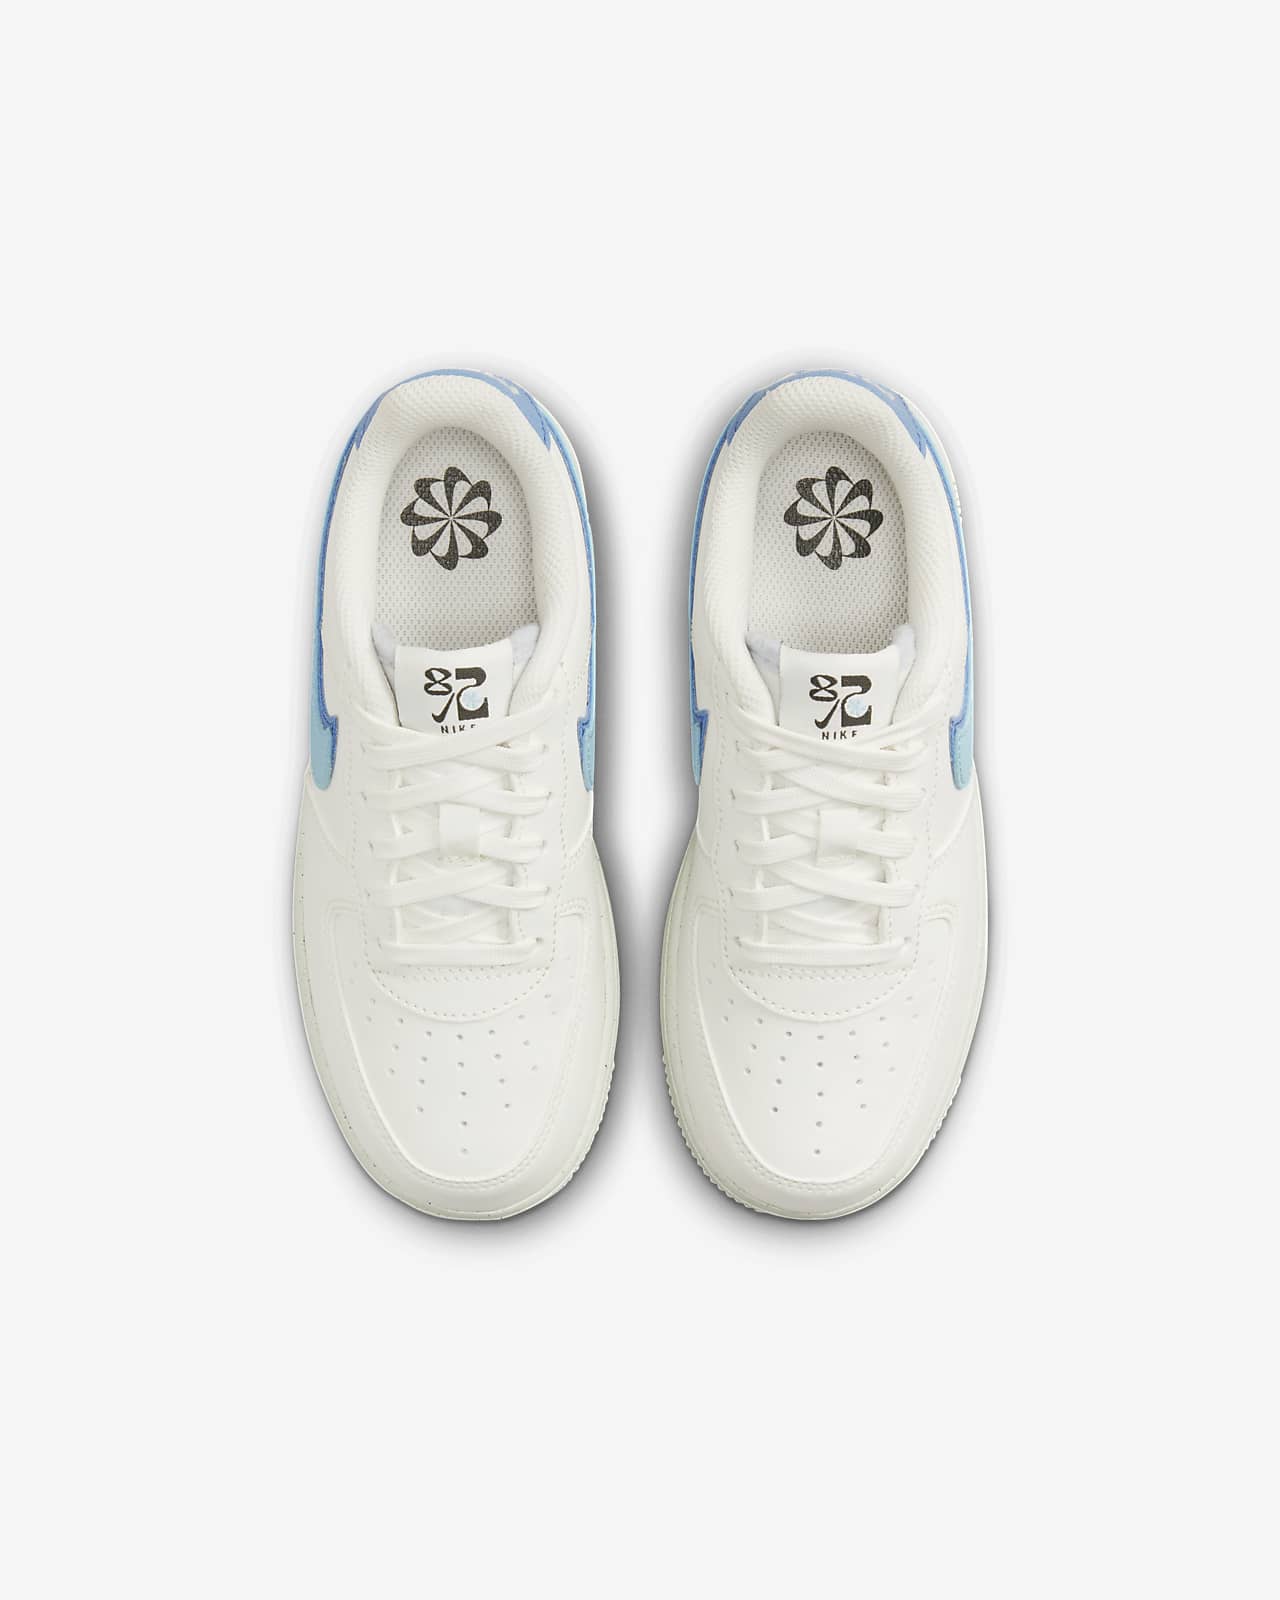 Sneakers Release – Nike Air Force 1 LV8 2 “Black/White” Grade  School, Preschool & Toddler Kids’ Shoe Launching 2/7